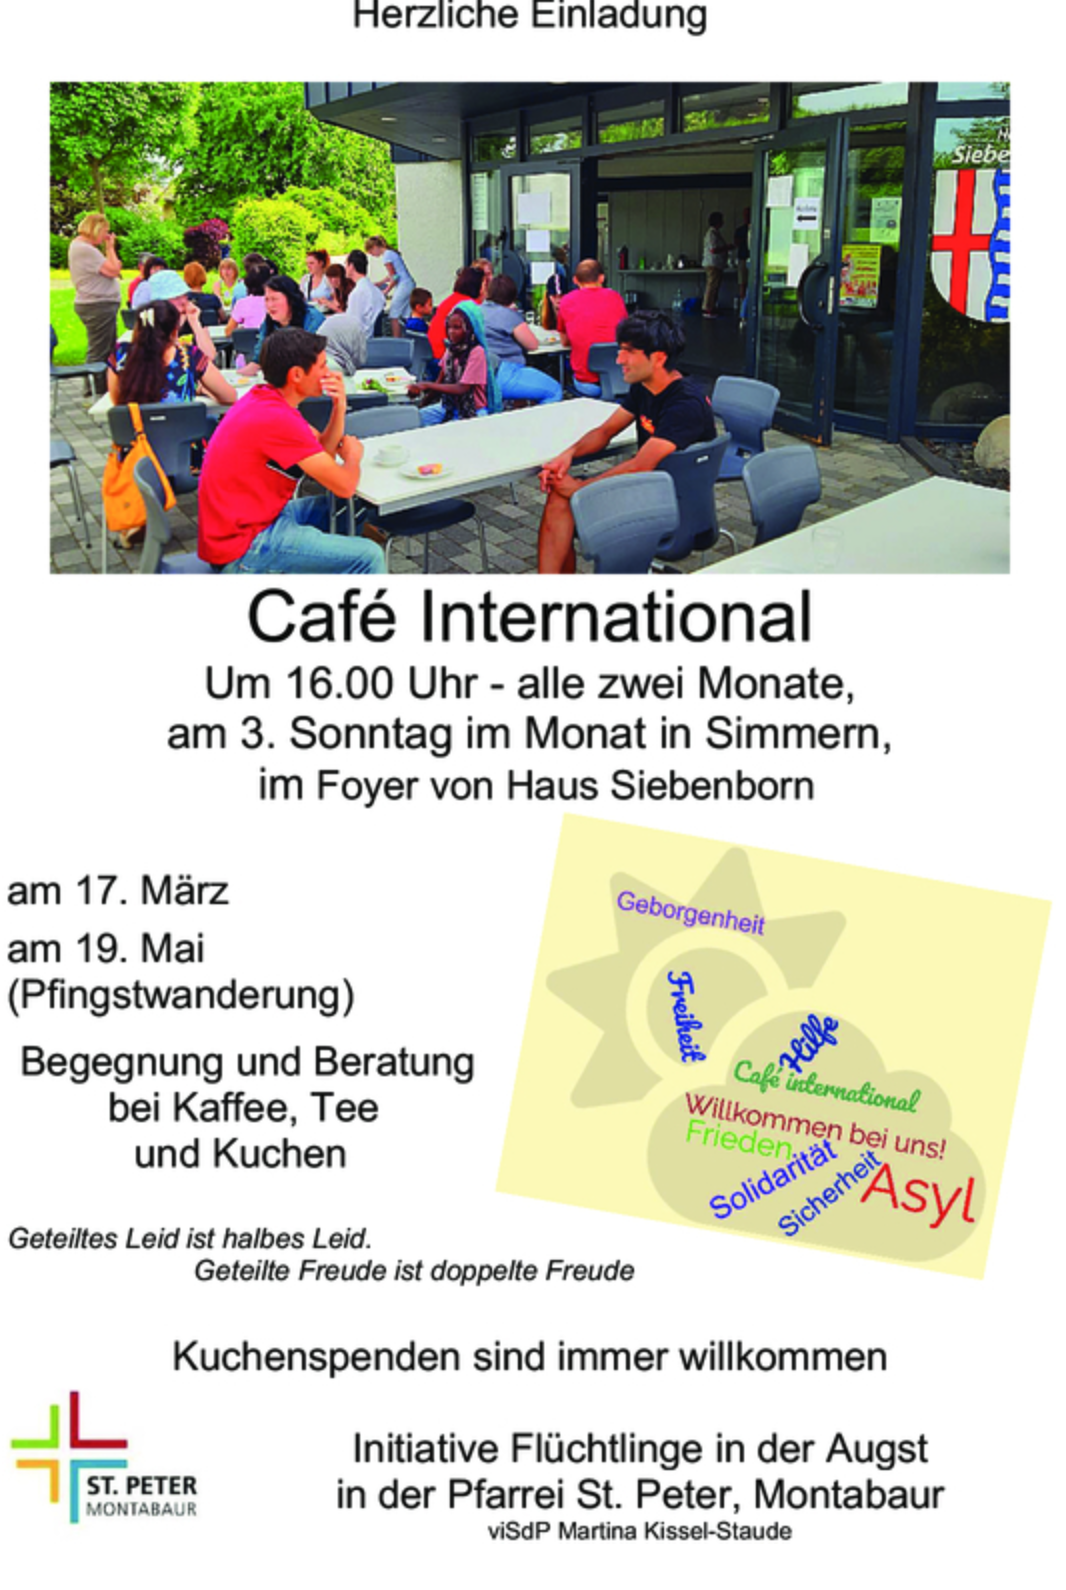 Cafe International 0324